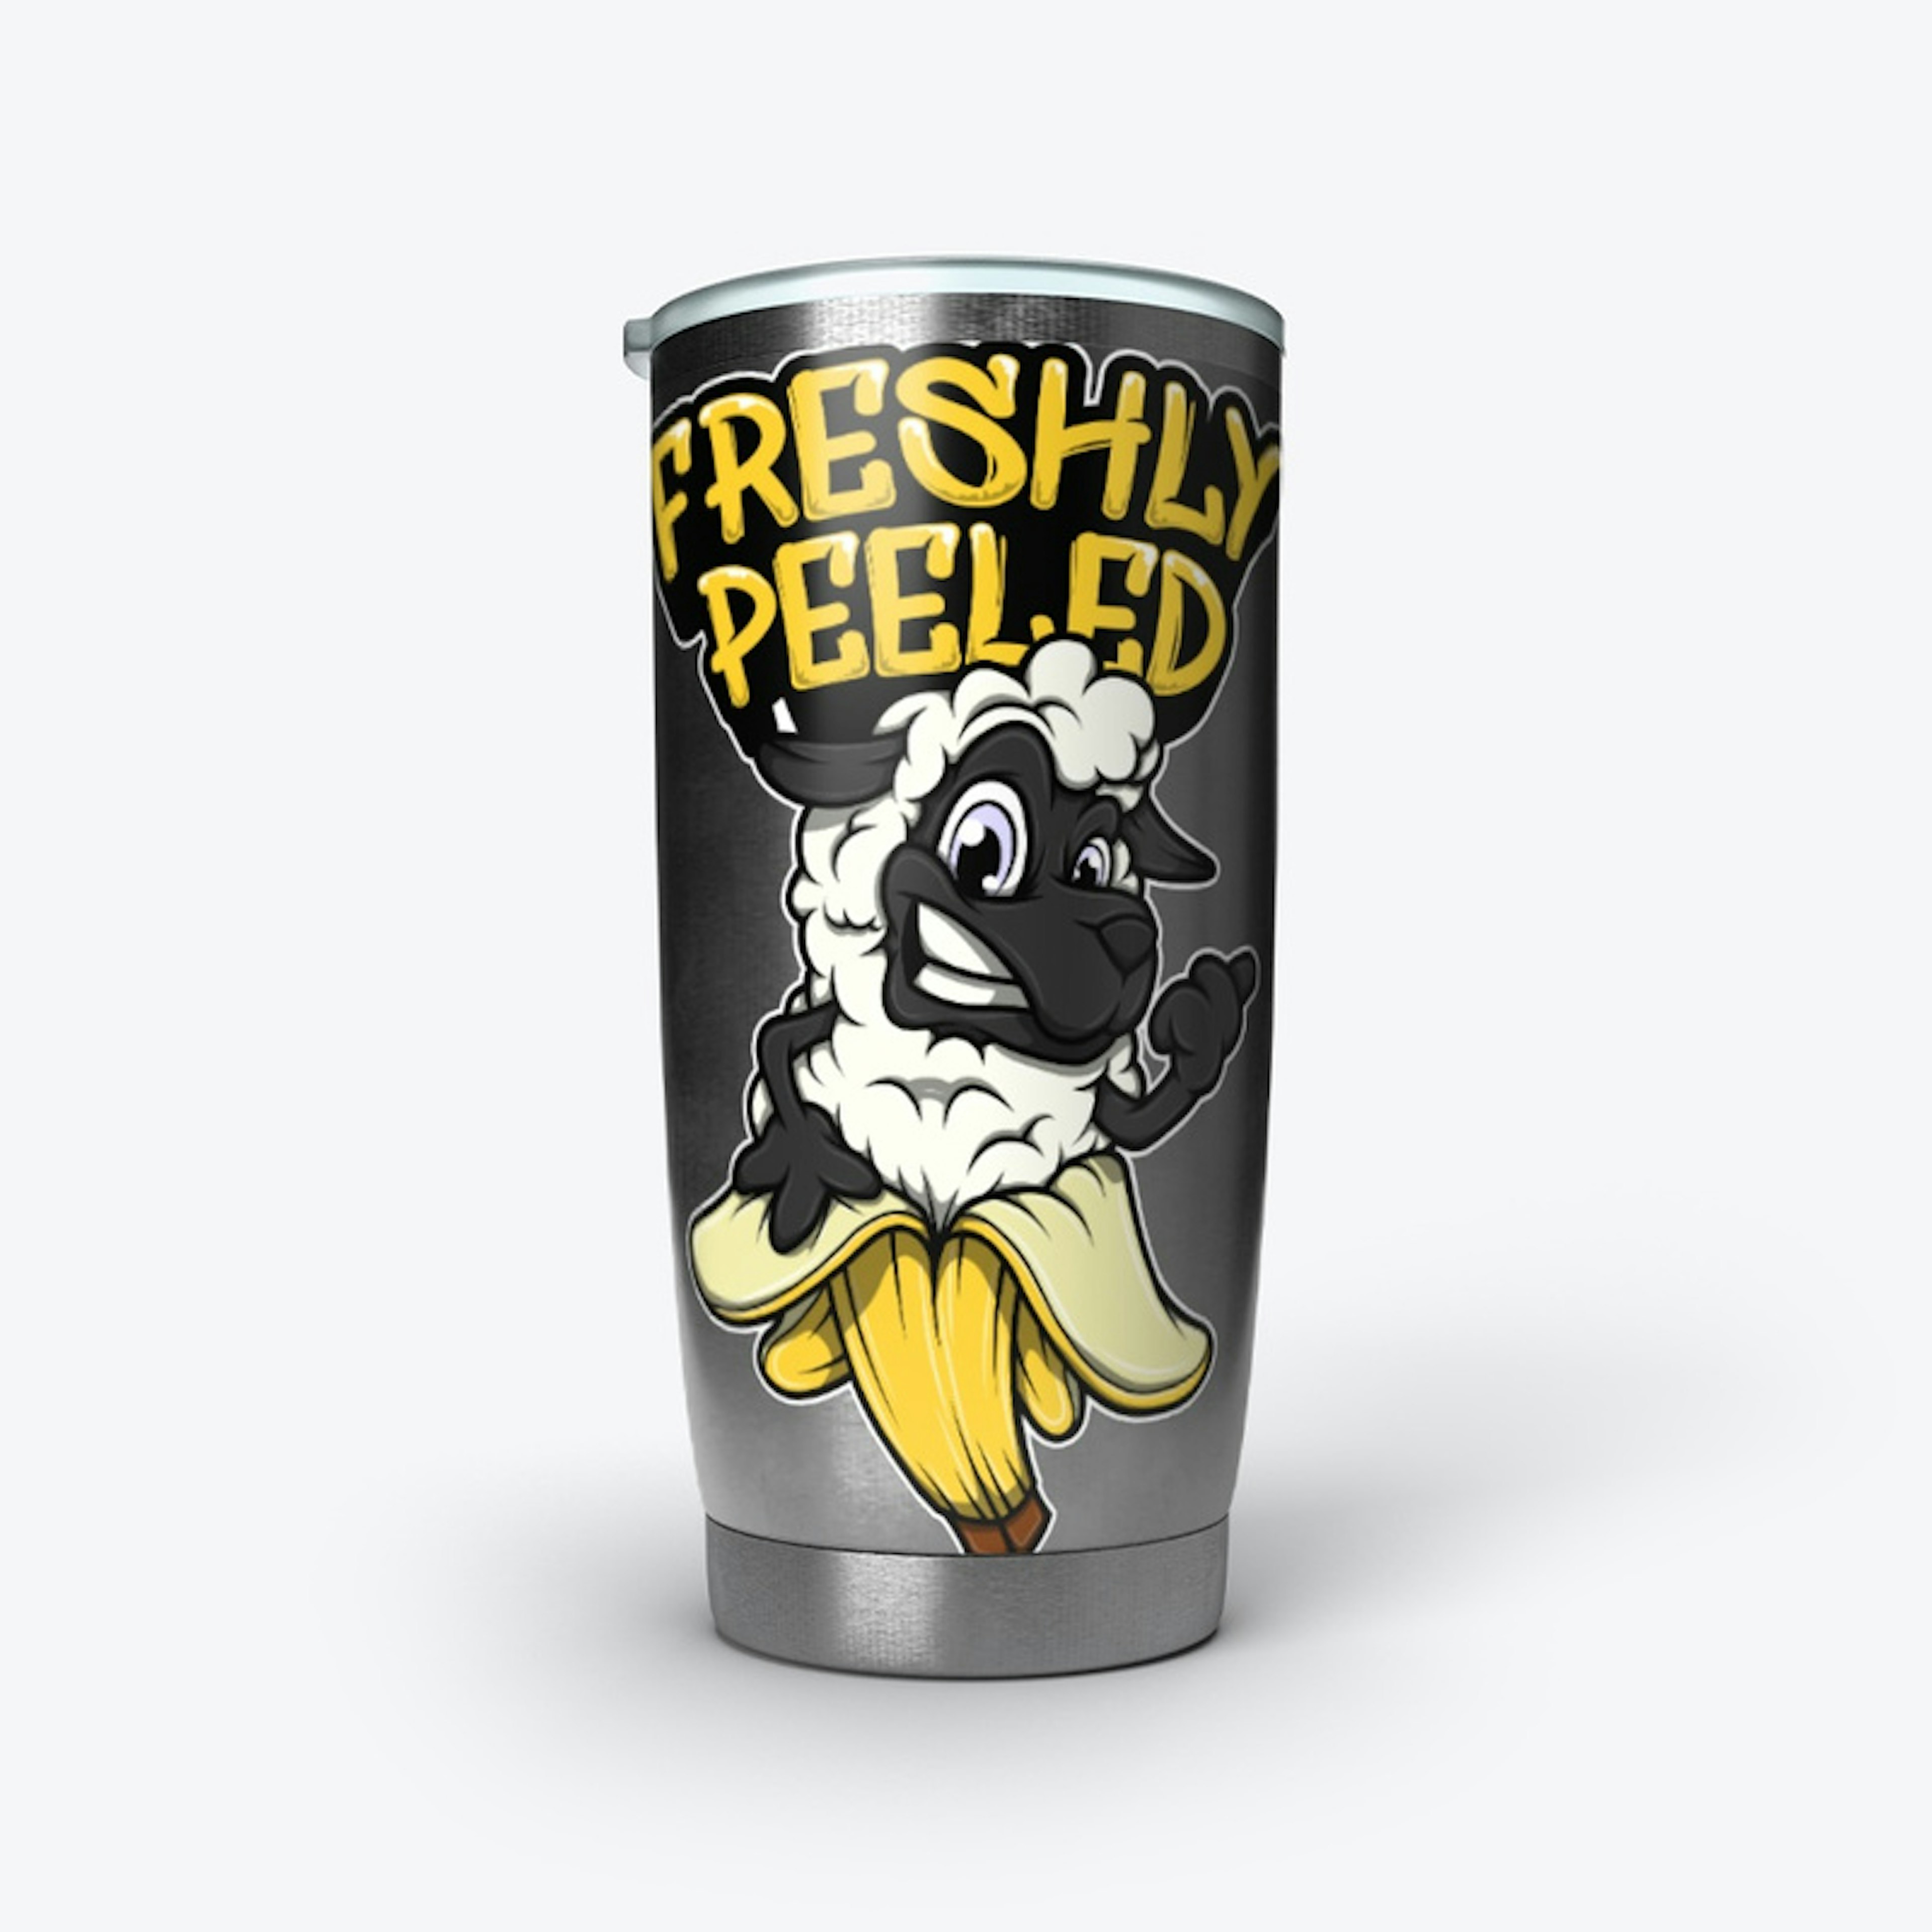 "Freshly Peeled" ™